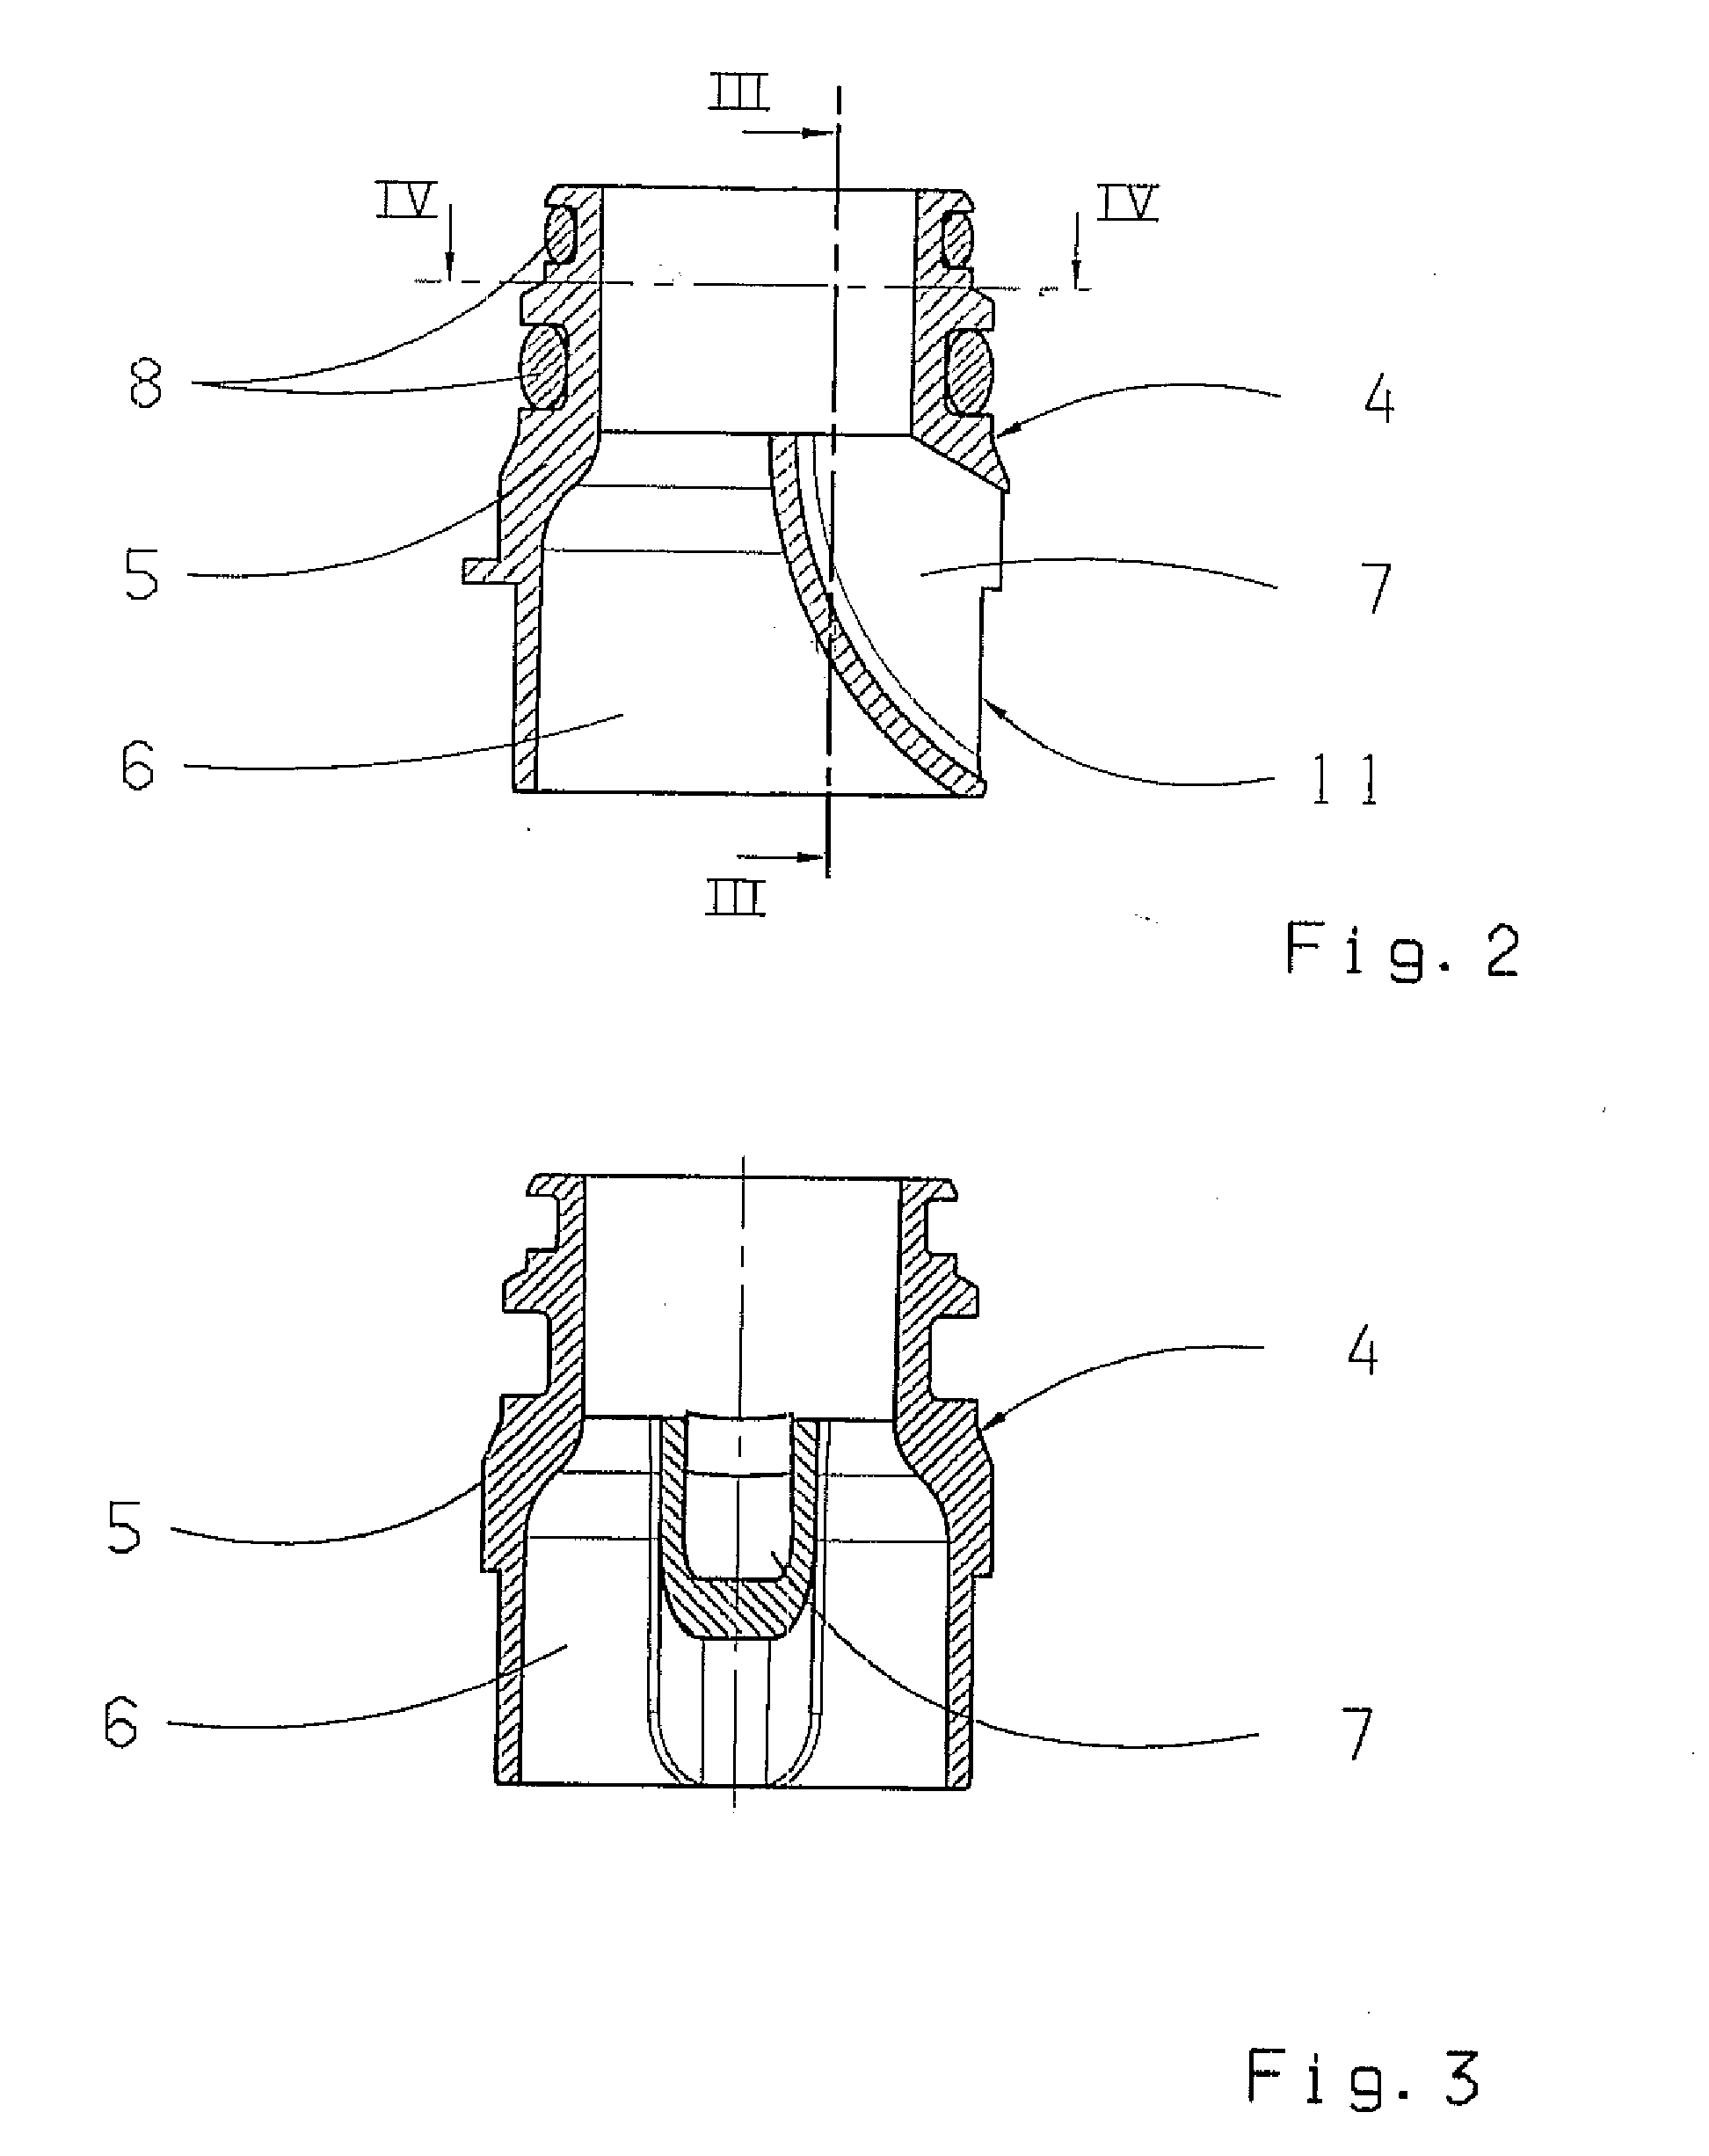 Connection arrangement for an oil pump of a transmission